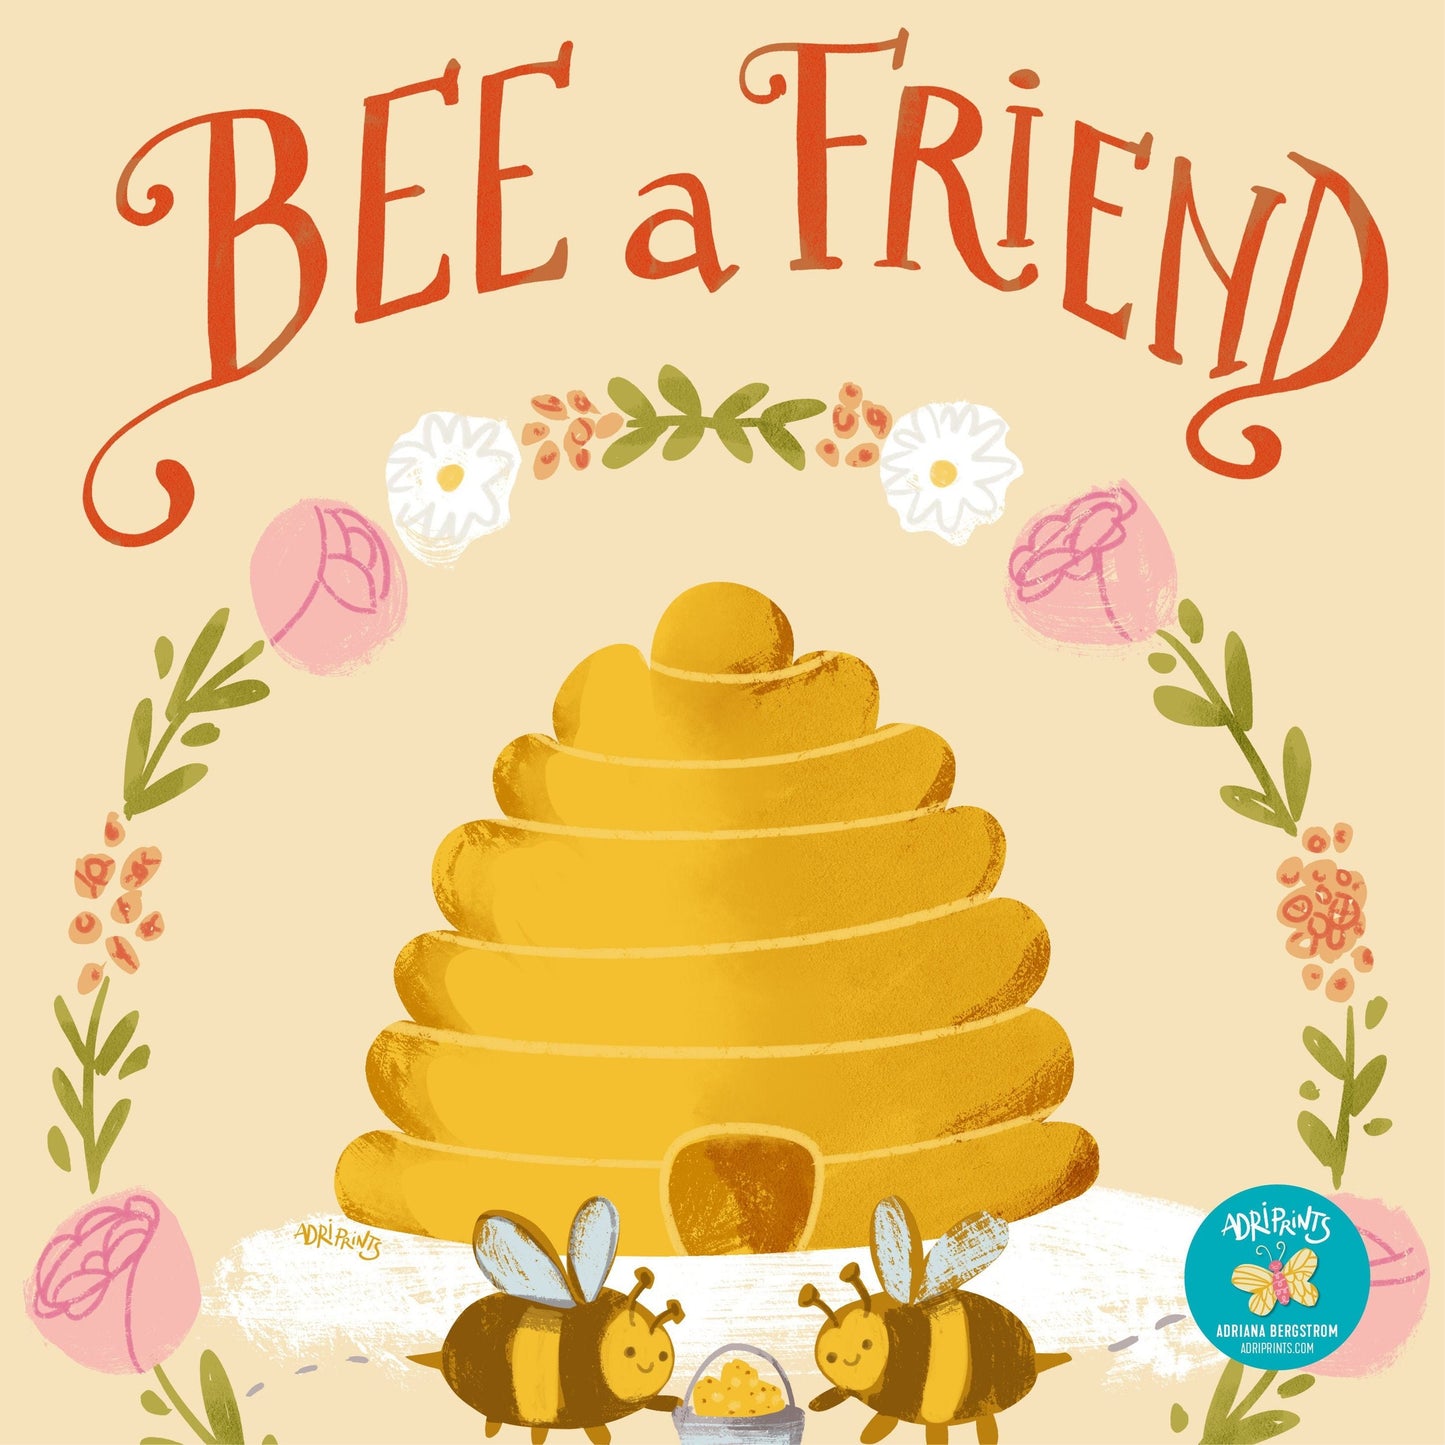 ART PRINT - Bee A Friend, Help A Friend artwork by Adriana Bergstrom (Adriprints)